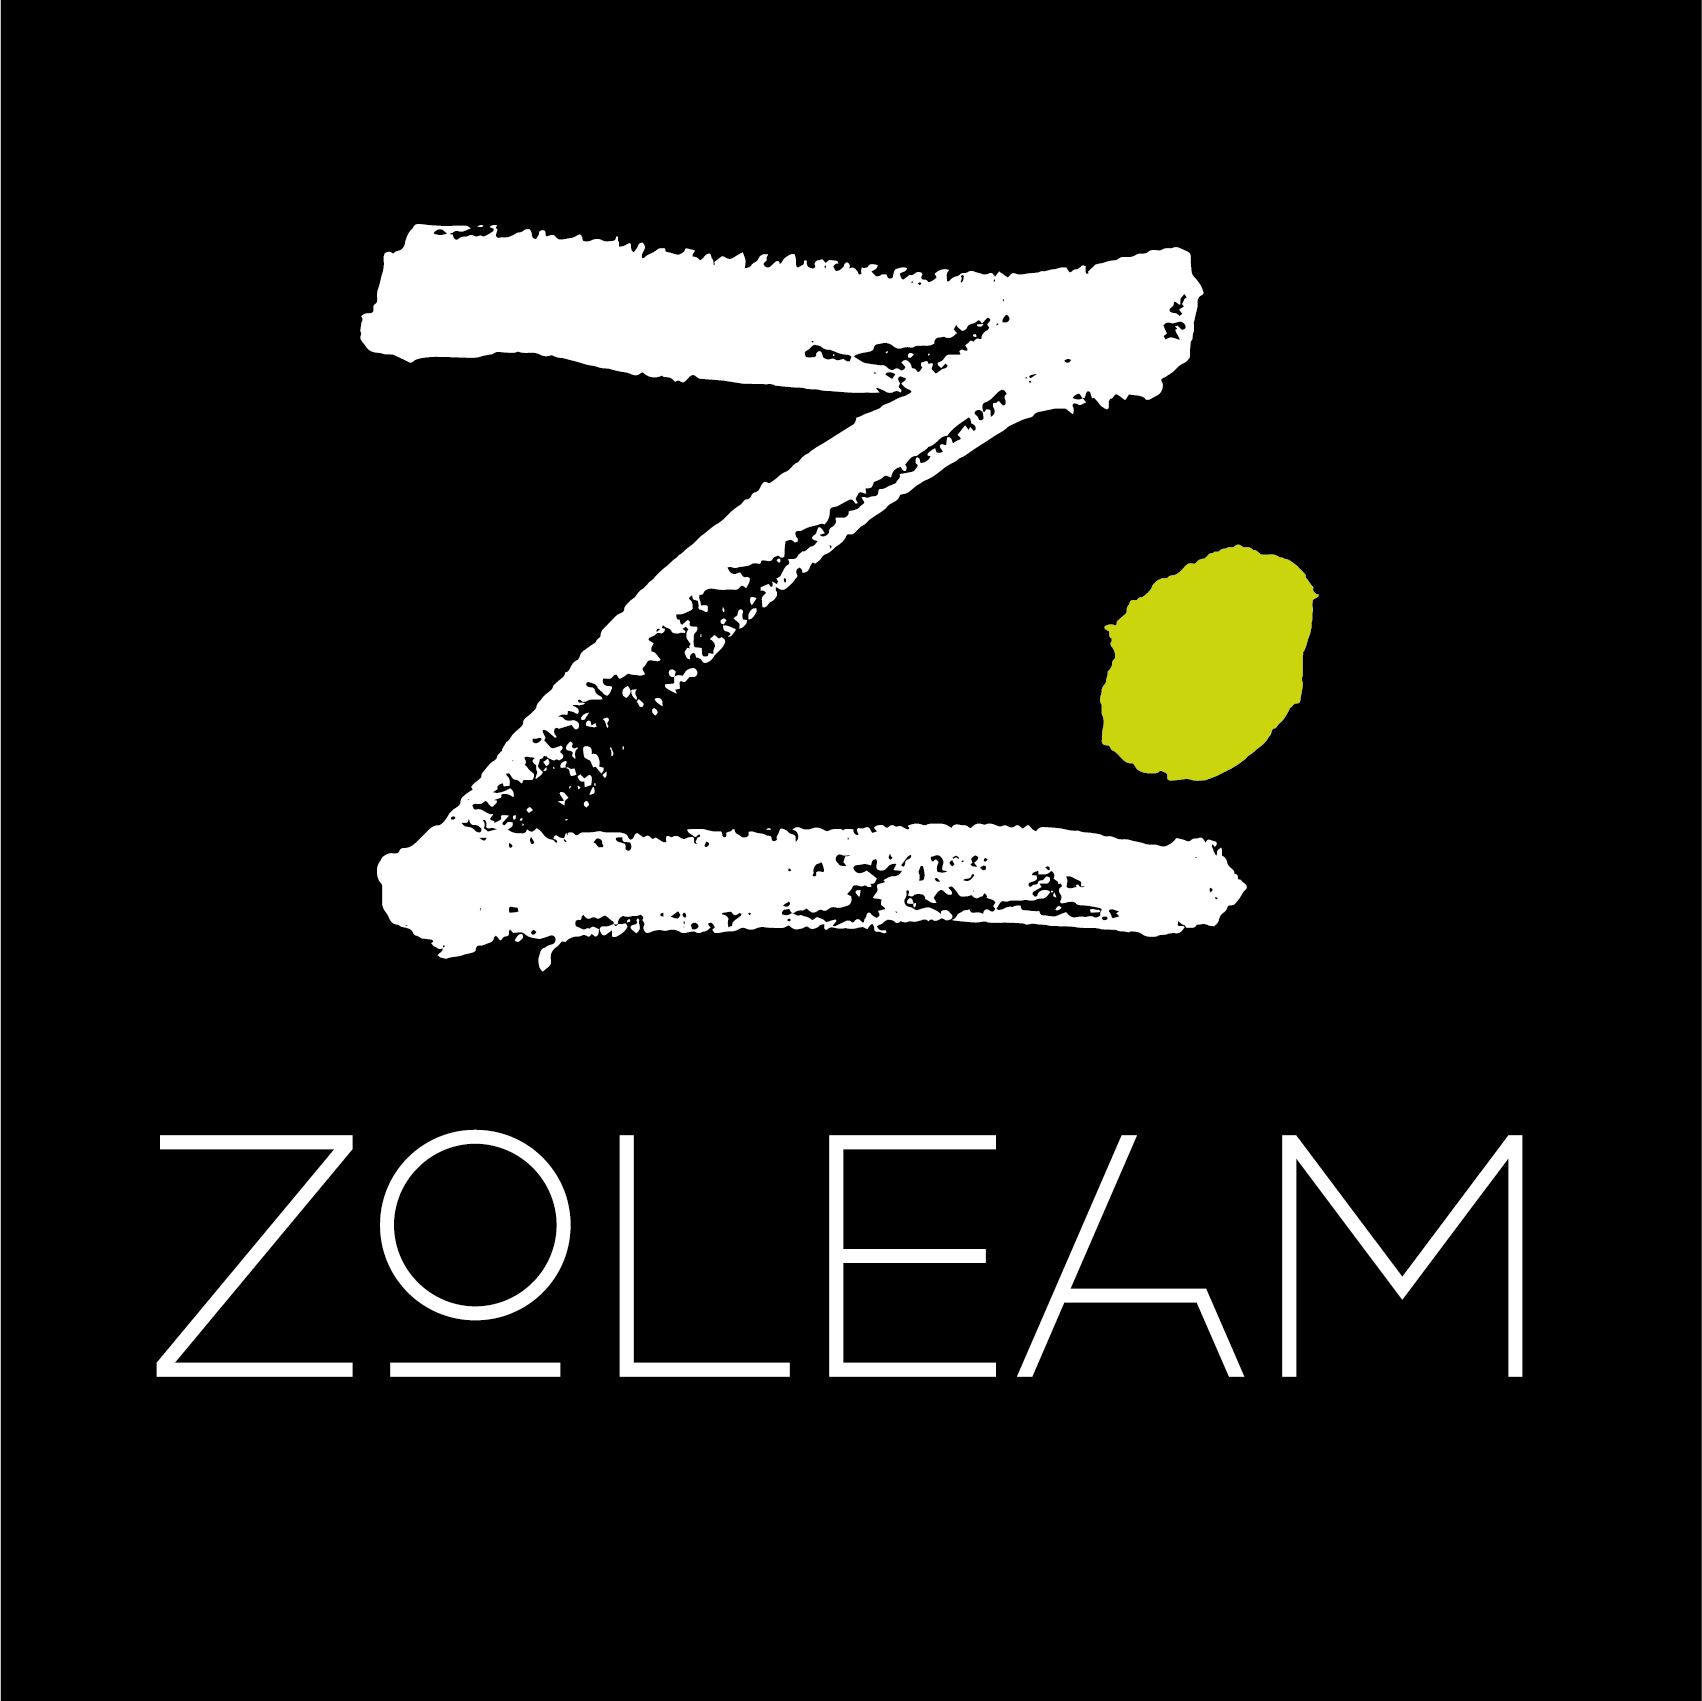 Zoleam